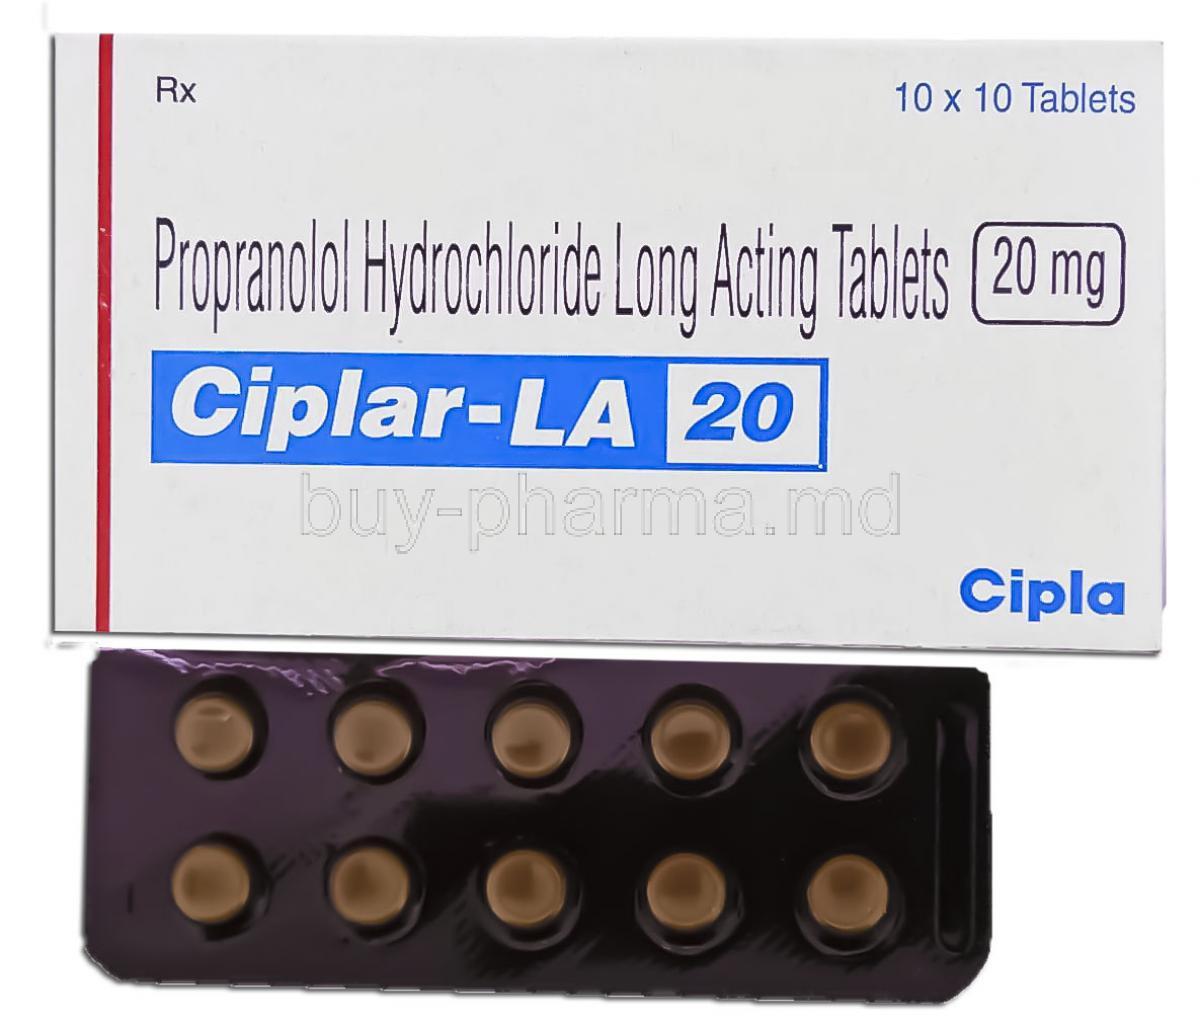 Mifepristone misoprostol tablets price